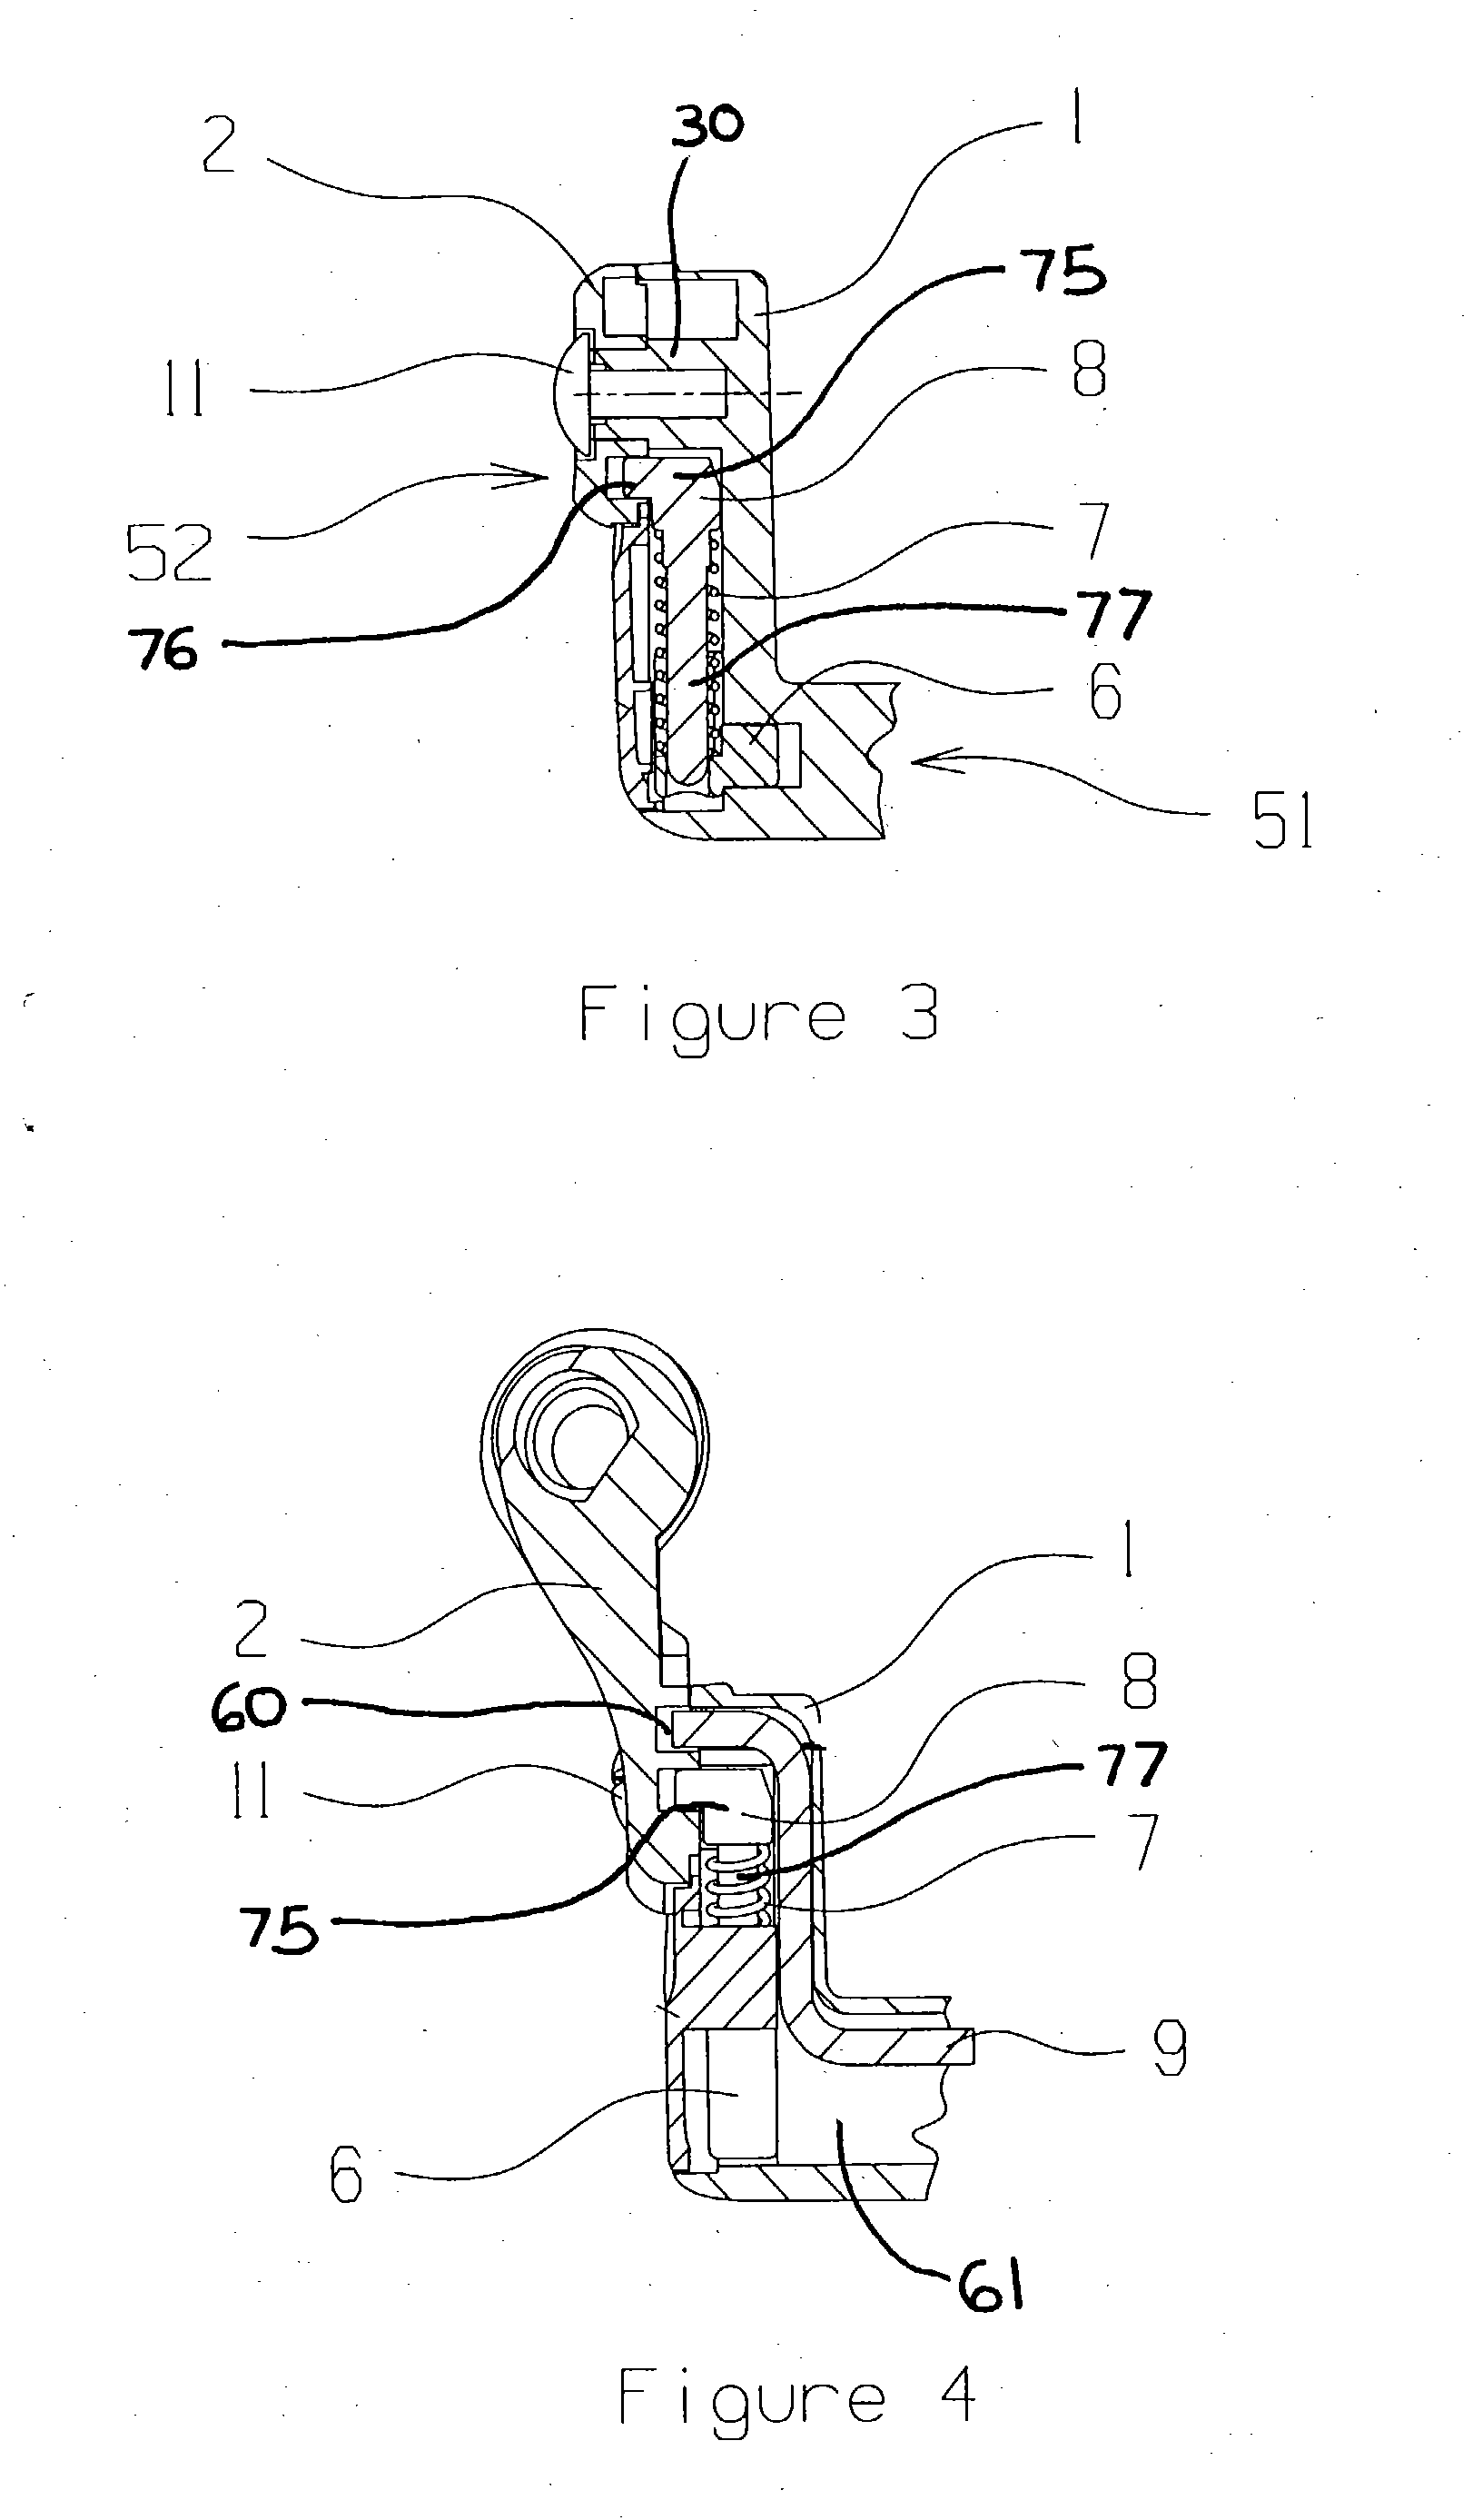 Trip mechanism for fishing reel